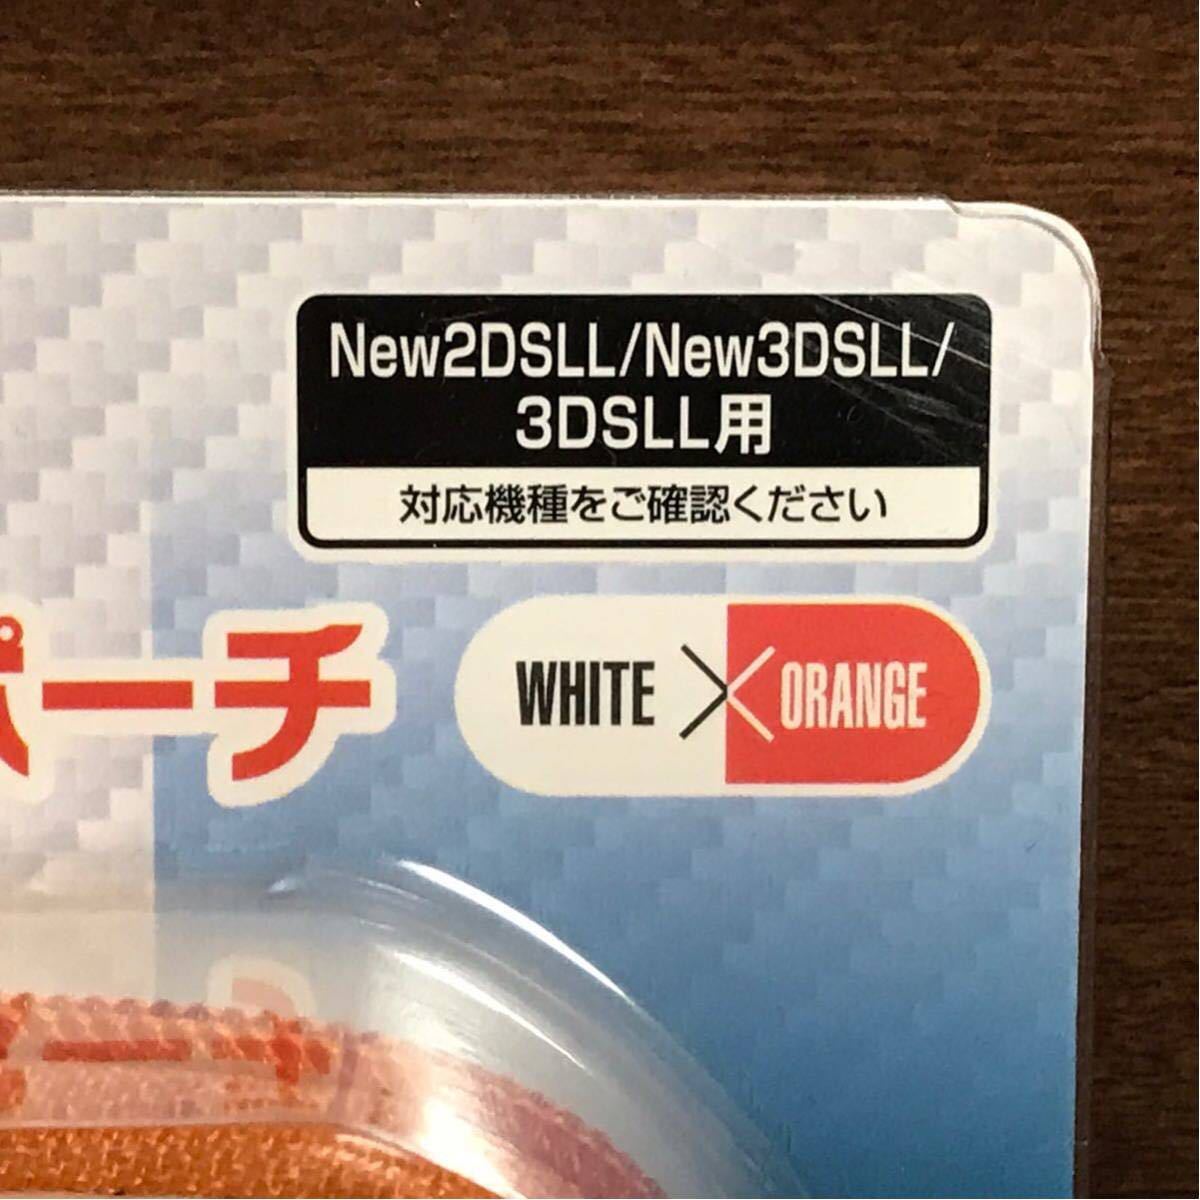 New2DSLL New3DSLL カーボンスタイルポーチ オレンジ ホワイト 任天堂 ニンテンドー